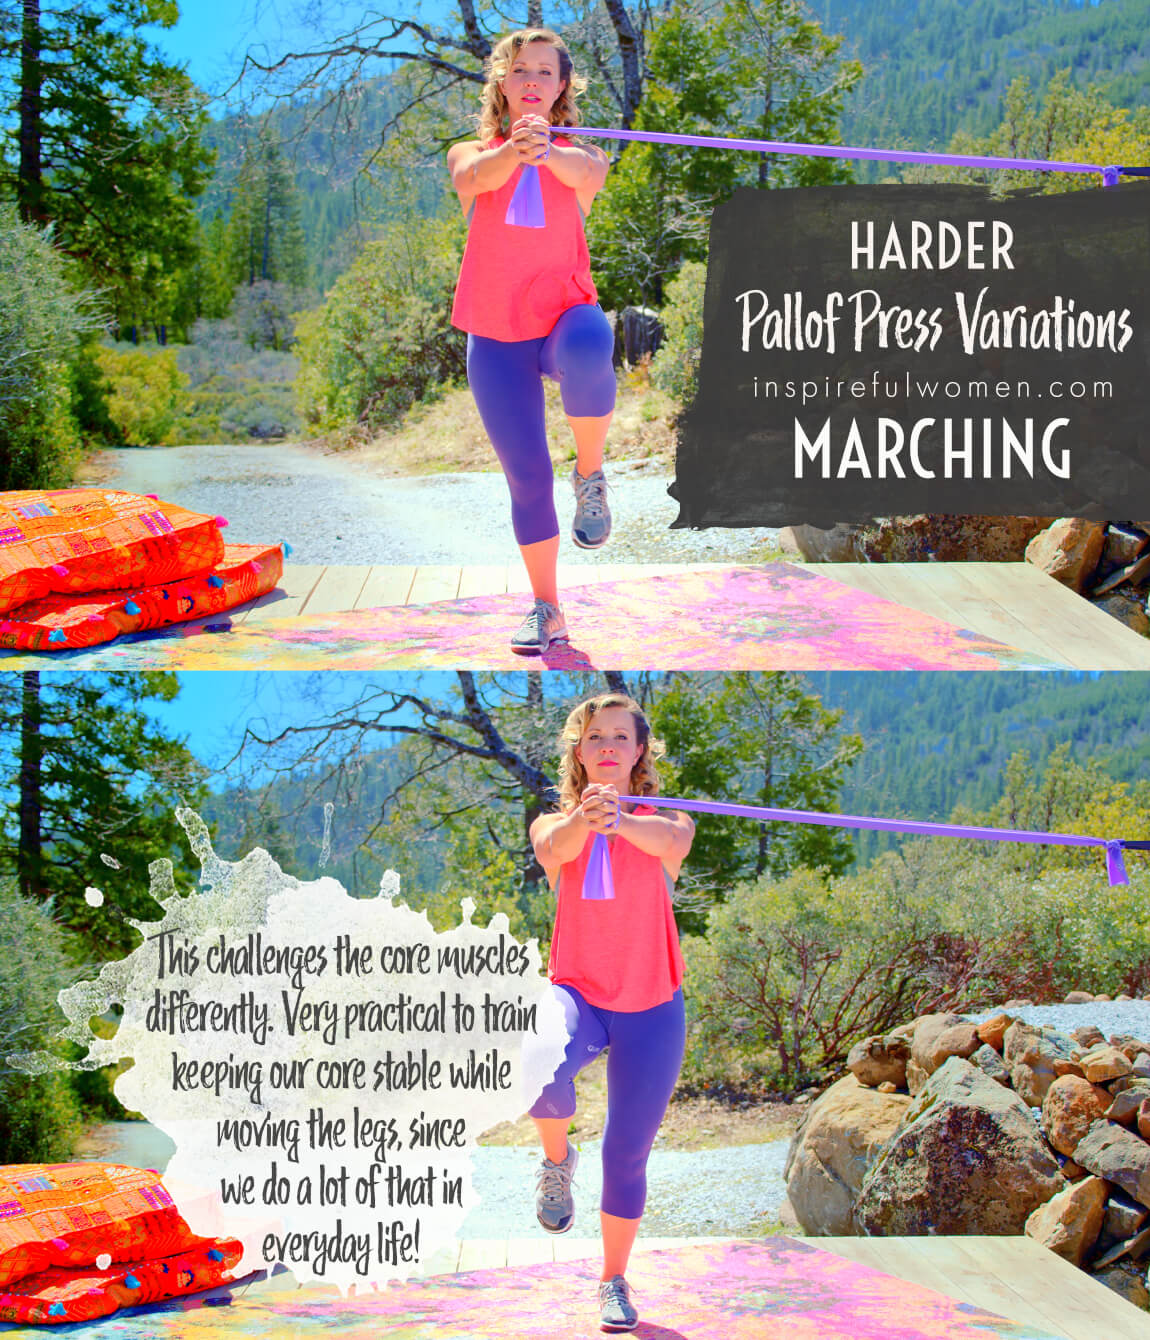 marching-palloff-press-core-exercise-variation-harder